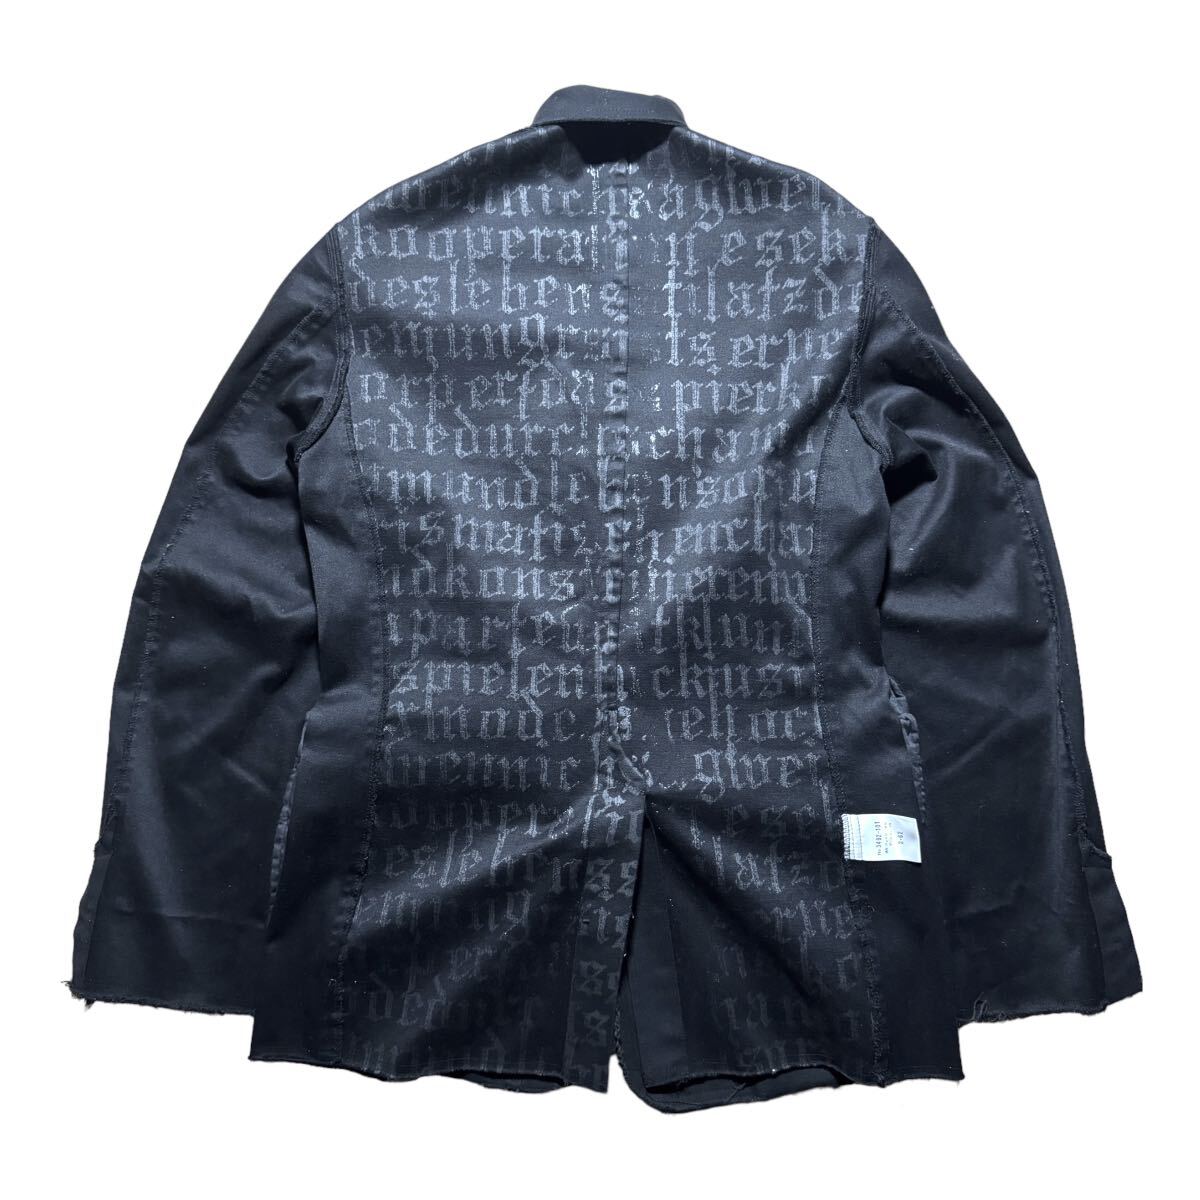 Rare SCHLUSSEL Japanese Label design jacket 14th addiction share spirit ifsixwasnine tornado mart lgb goa kmrii obelisk 00s gunda の画像1